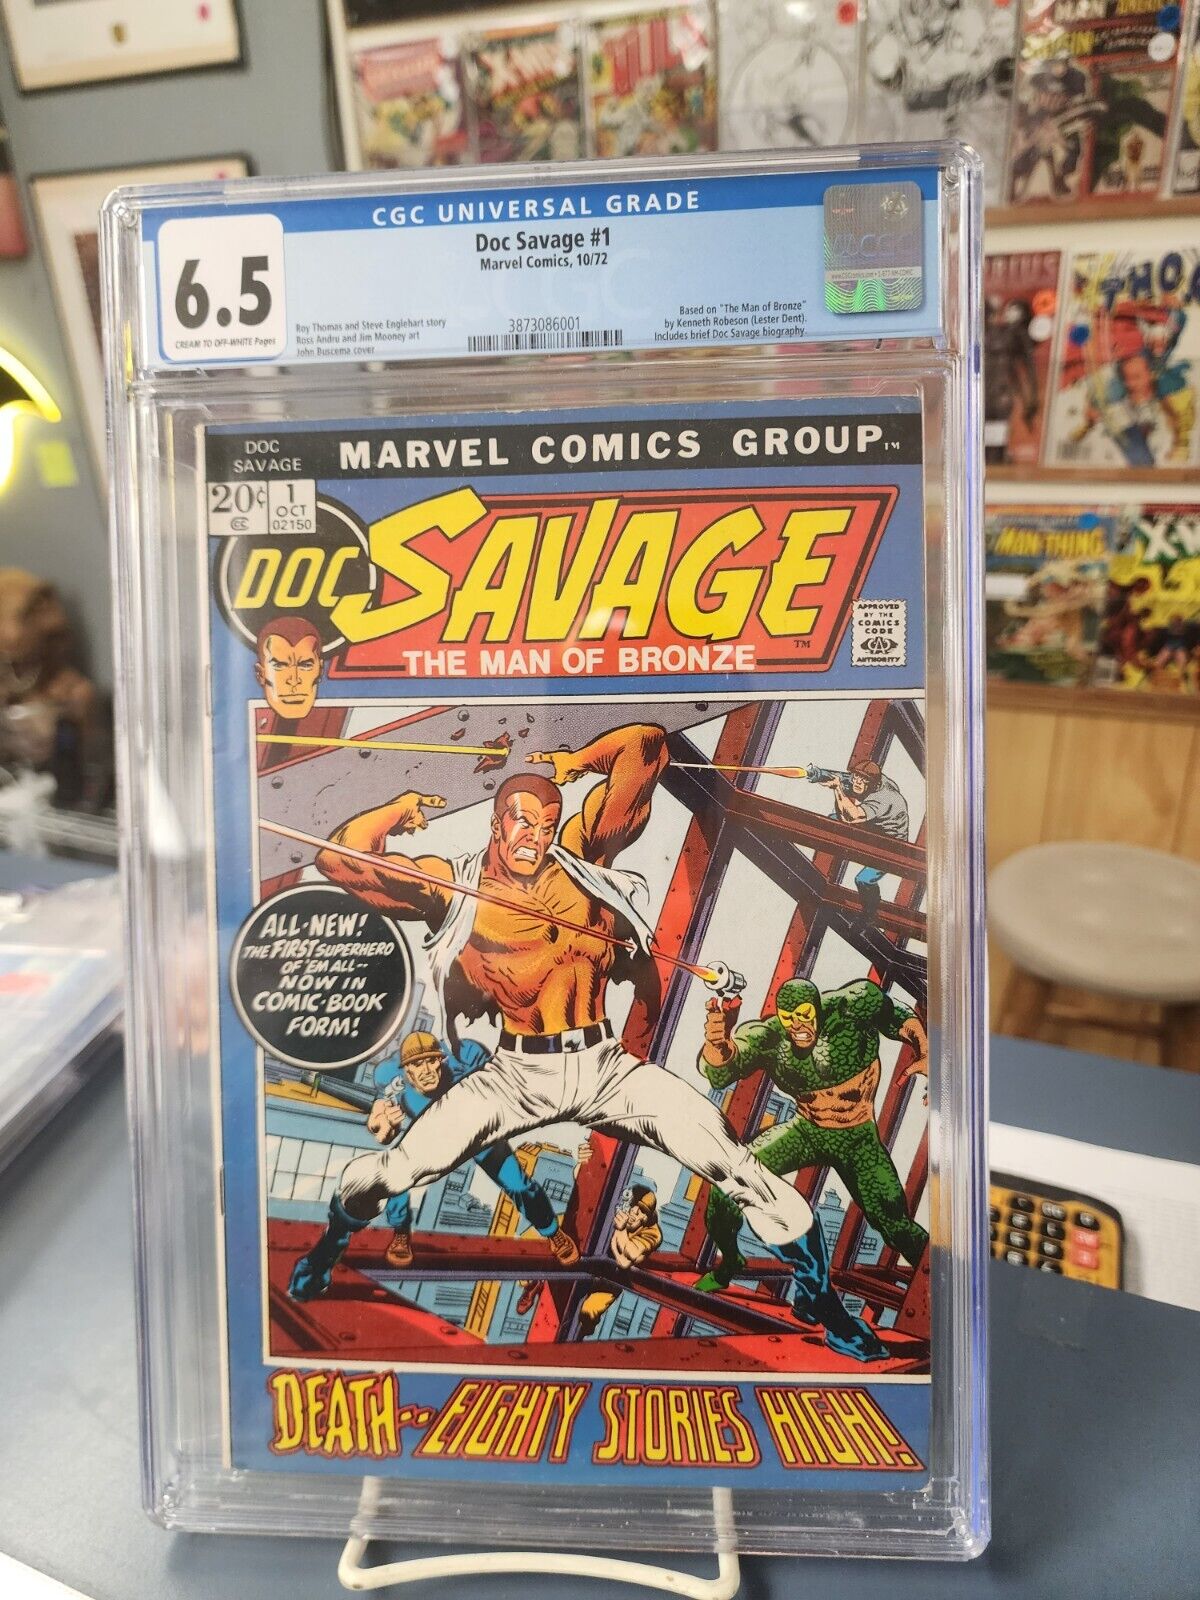 Doc Savage #1. Cgc 6.5